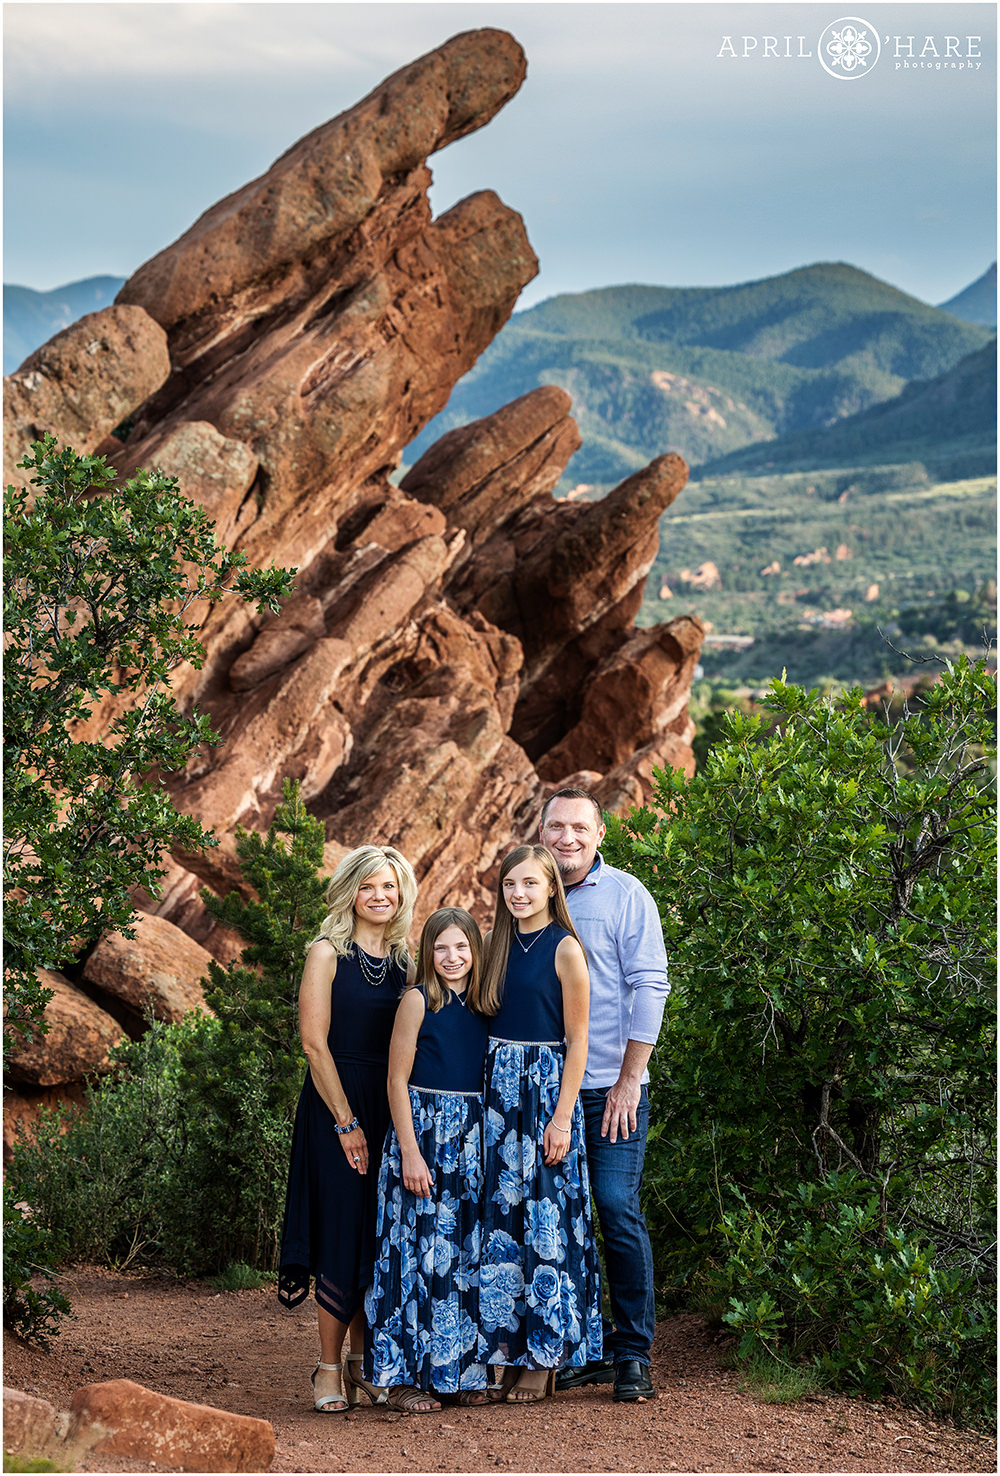 Colorado Springs family photos with dramatic red rock backdrop in Colorado